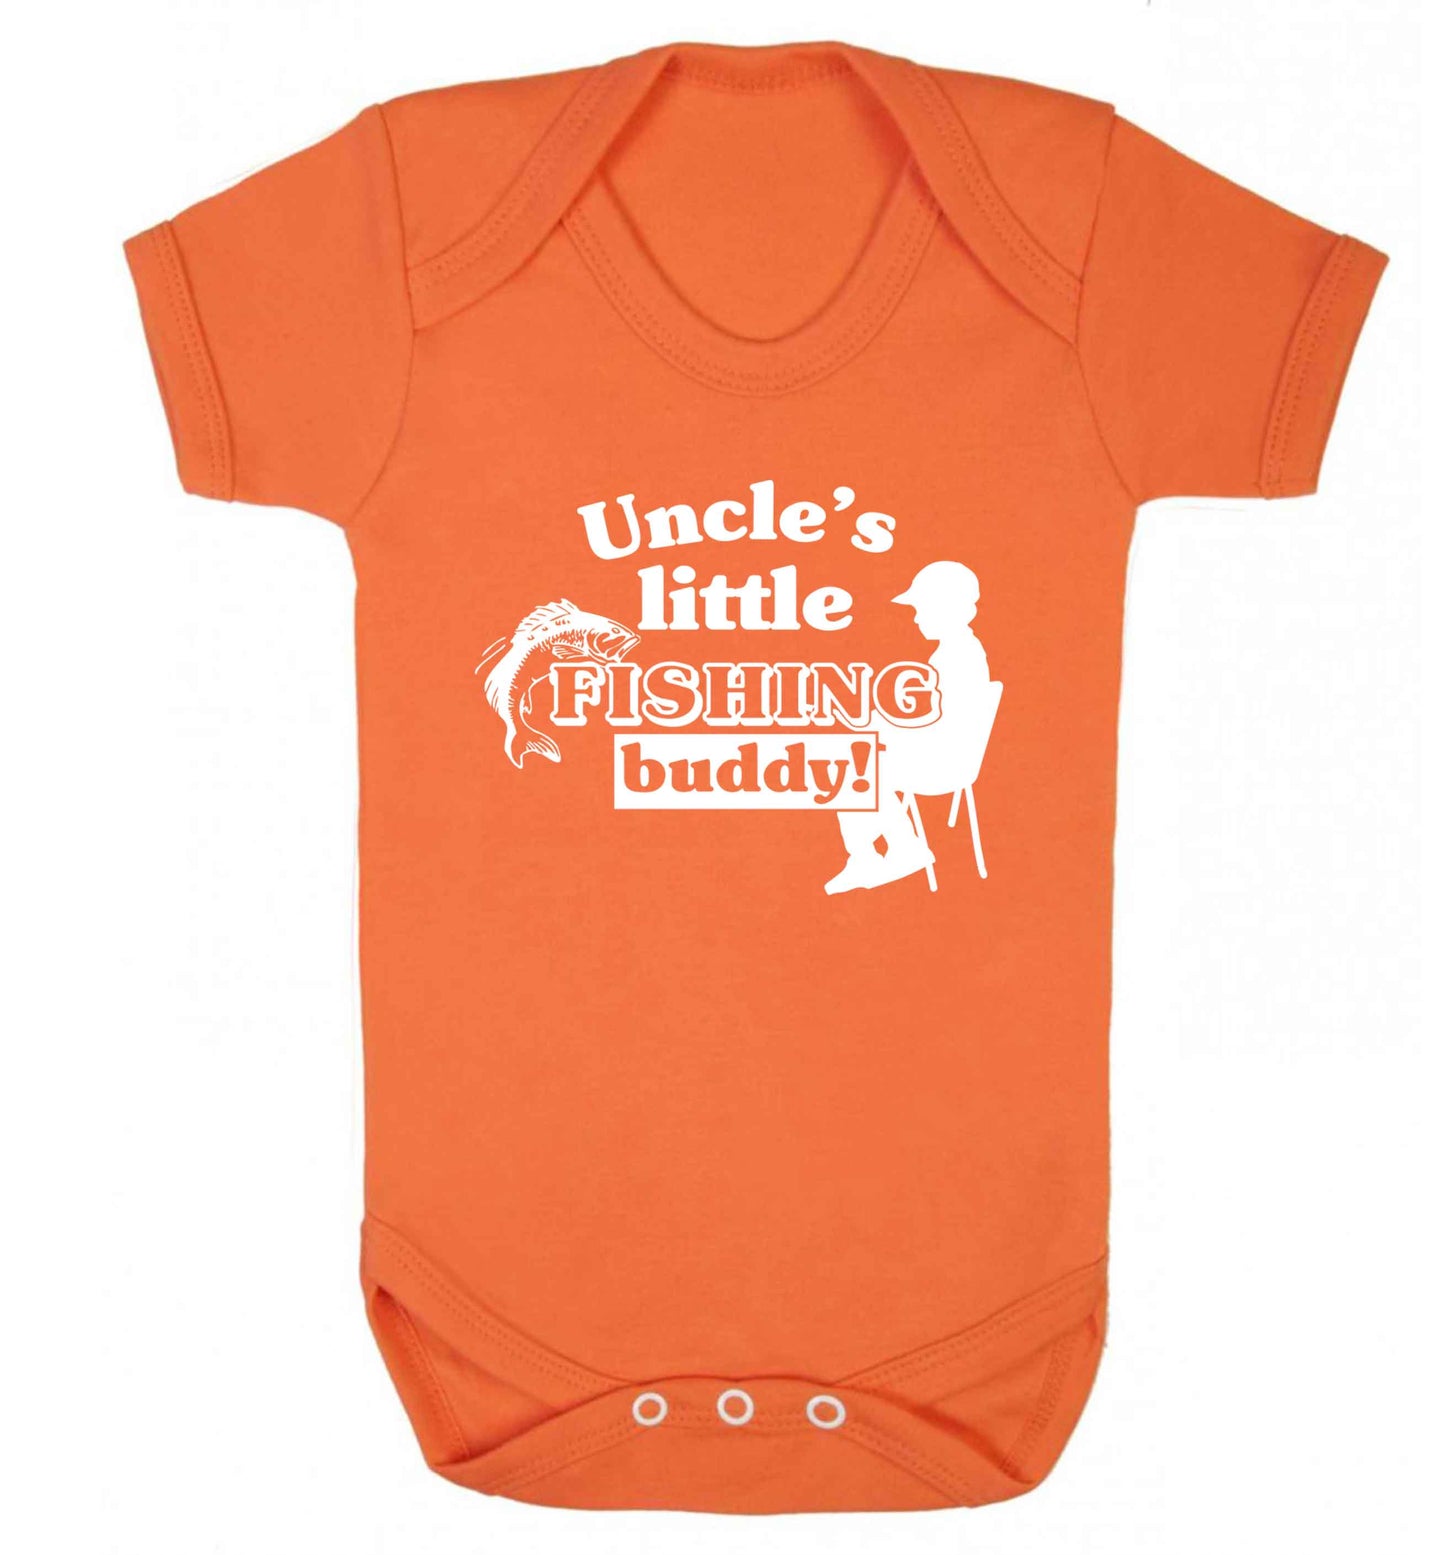 Uncle's little fishing buddy Baby Vest orange 18-24 months